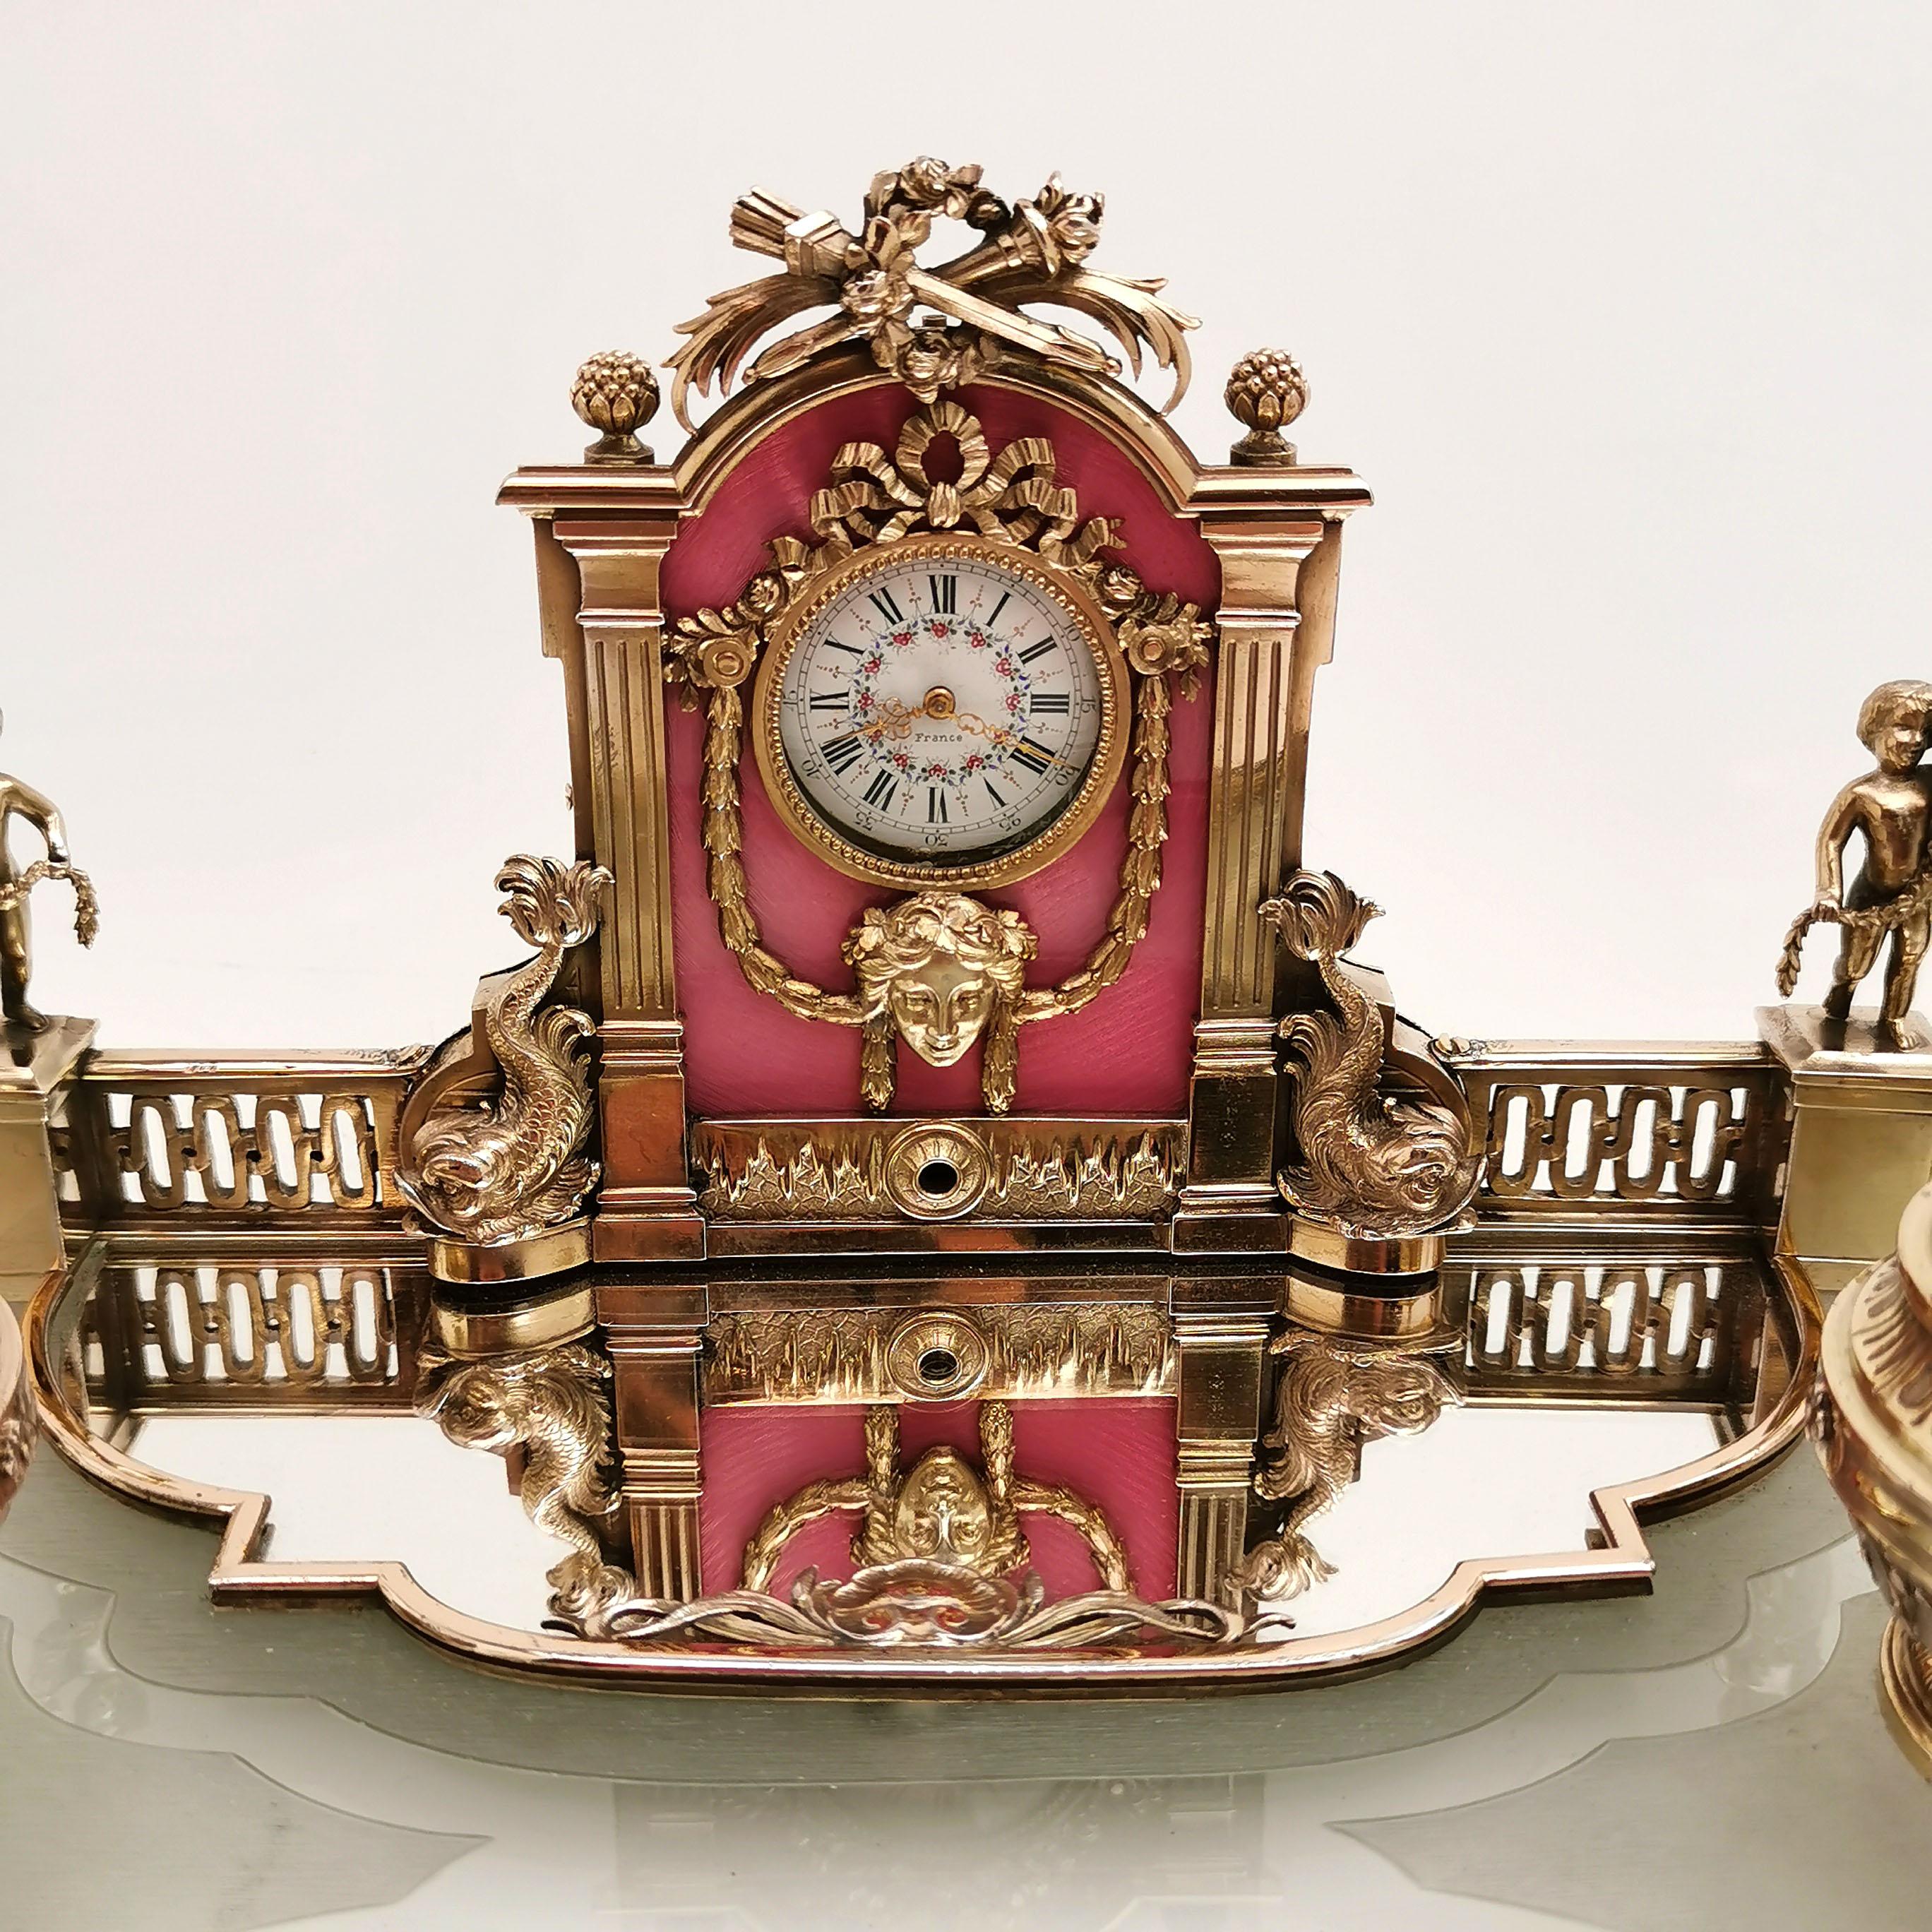 20th Century Antique French Silver Gilt, Glass & Enamel Inkstand Clock, Paris, France c. 1880